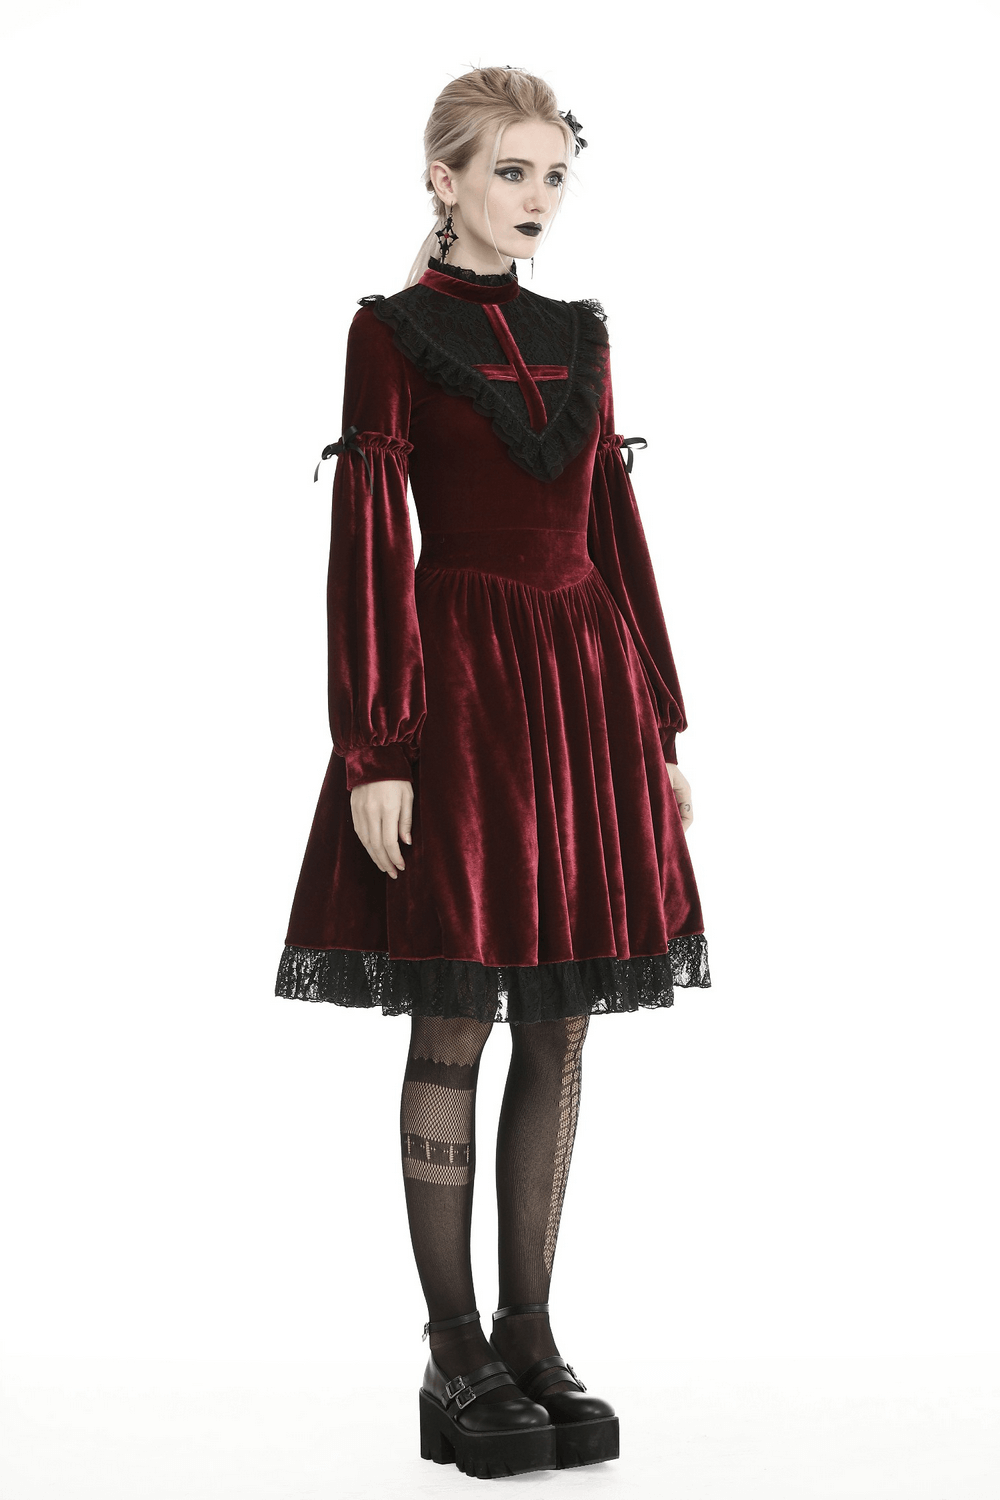 Elegant Velvet Gothic Dress with Lace Detail - Victorian Romance